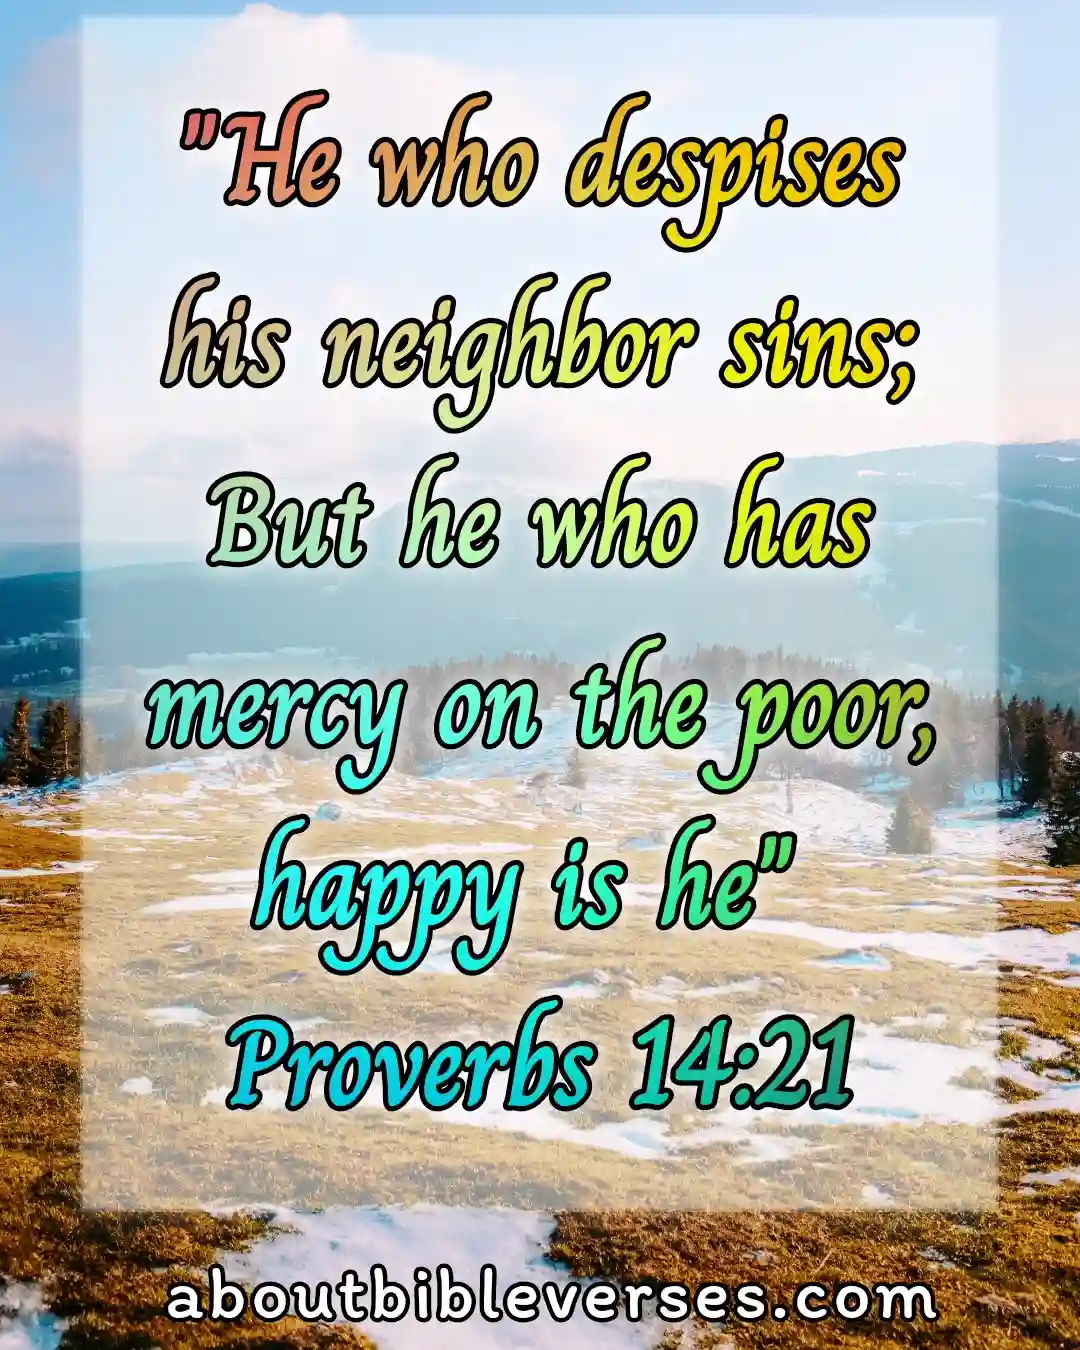 Today bible verse(Proverbs 14:21)